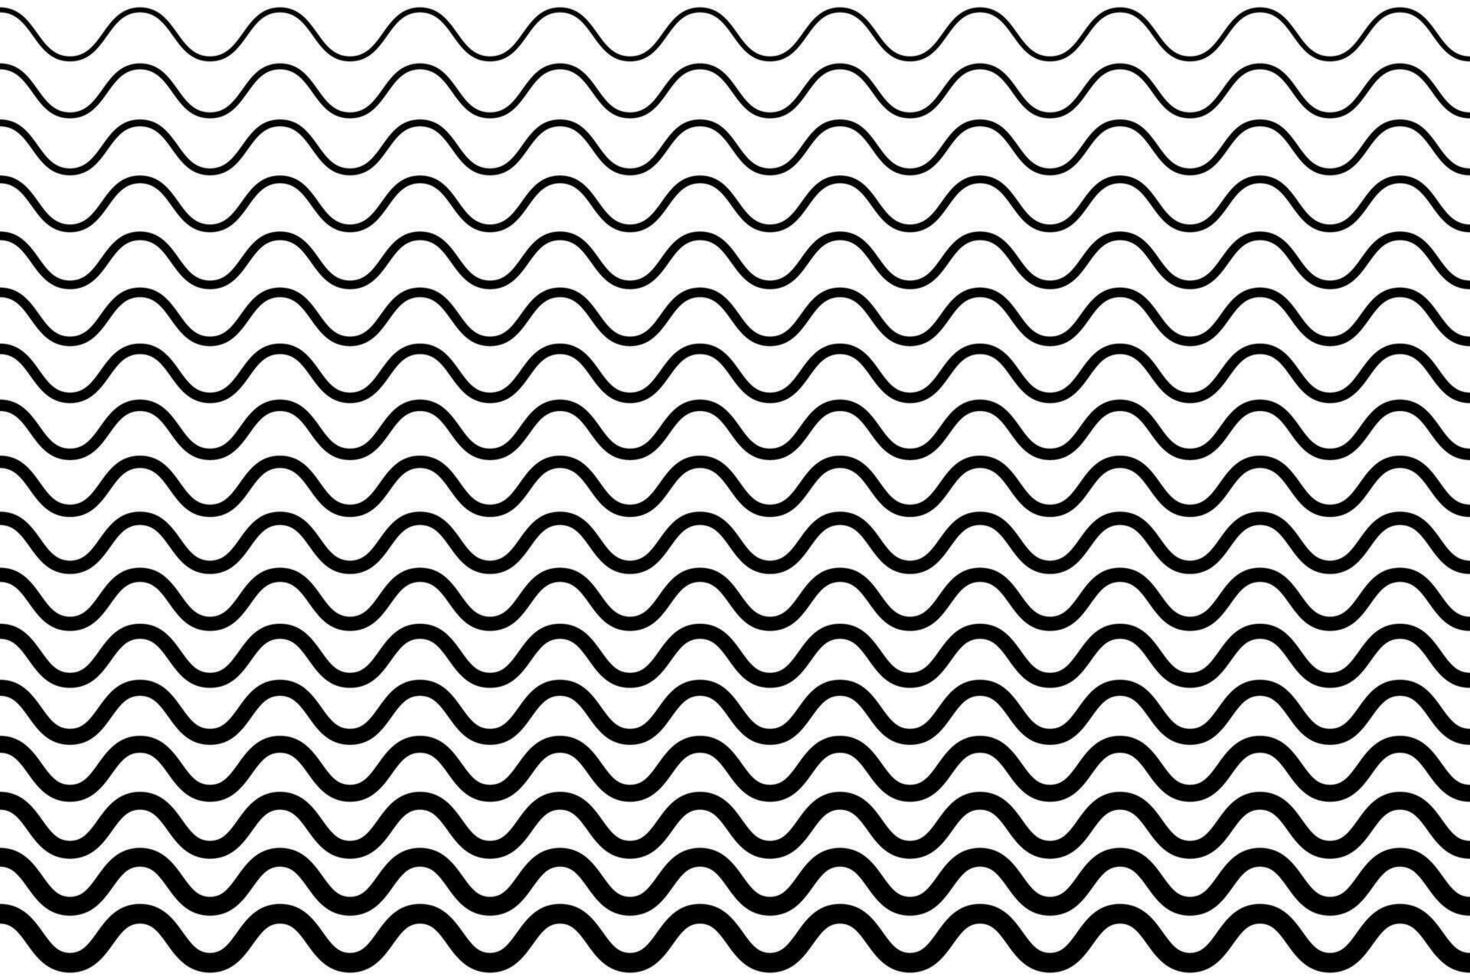 dünn wellig Linien nahtlos Muster. wiederholbar wellig Zickzack- Linien Vektor Muster.